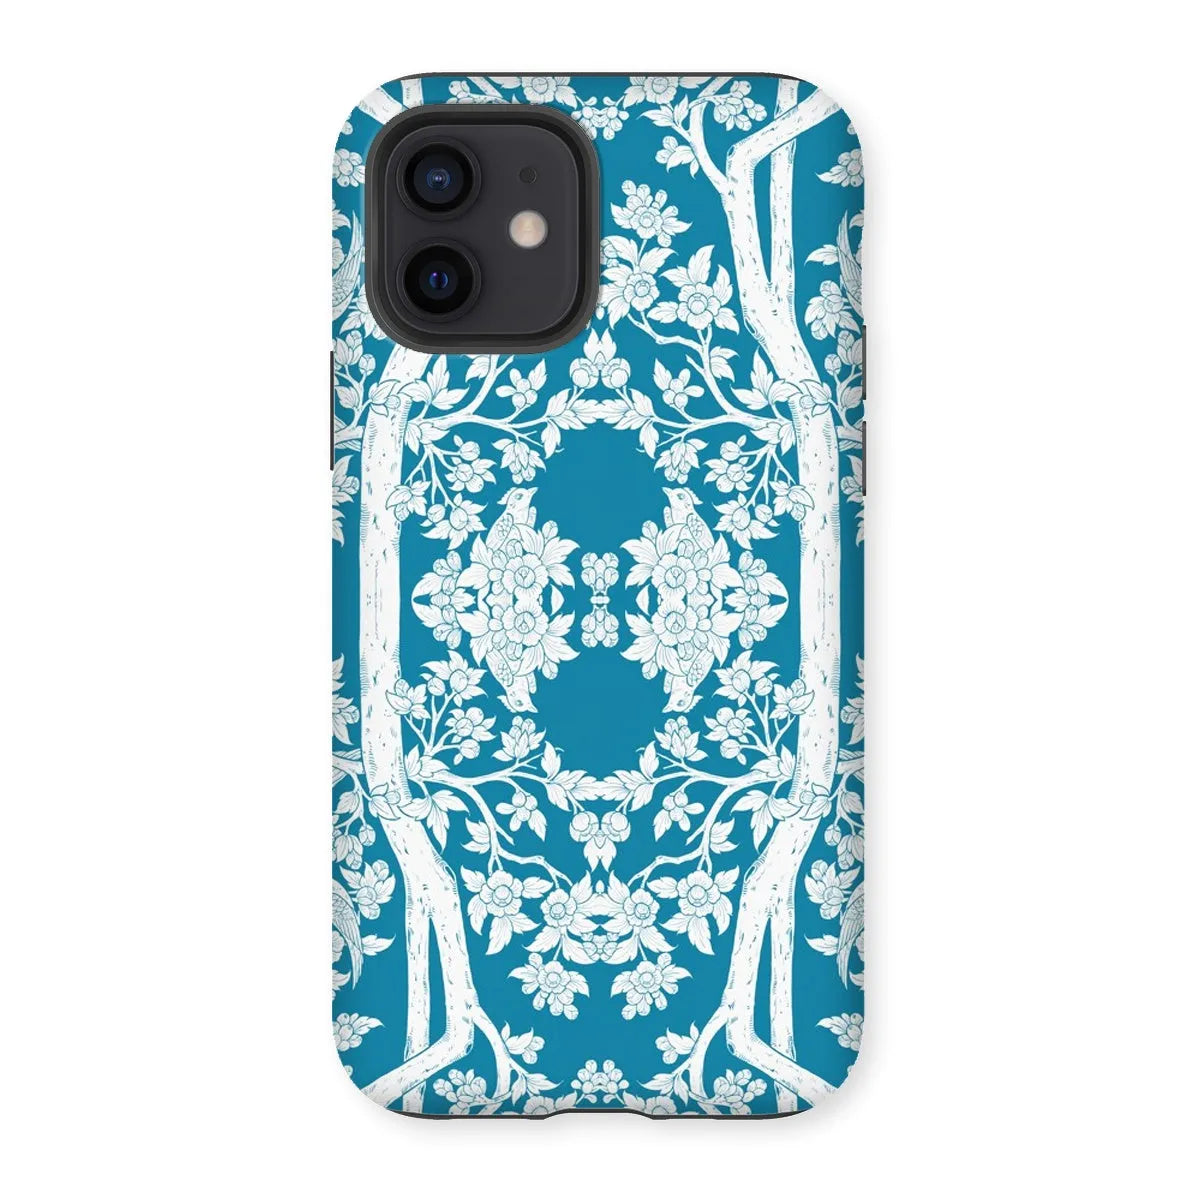 Aviary Blue Aesthetic Pattern Art Phone Case - Iphone 12 / Matte - Mobile Phone Cases - Aesthetic Art